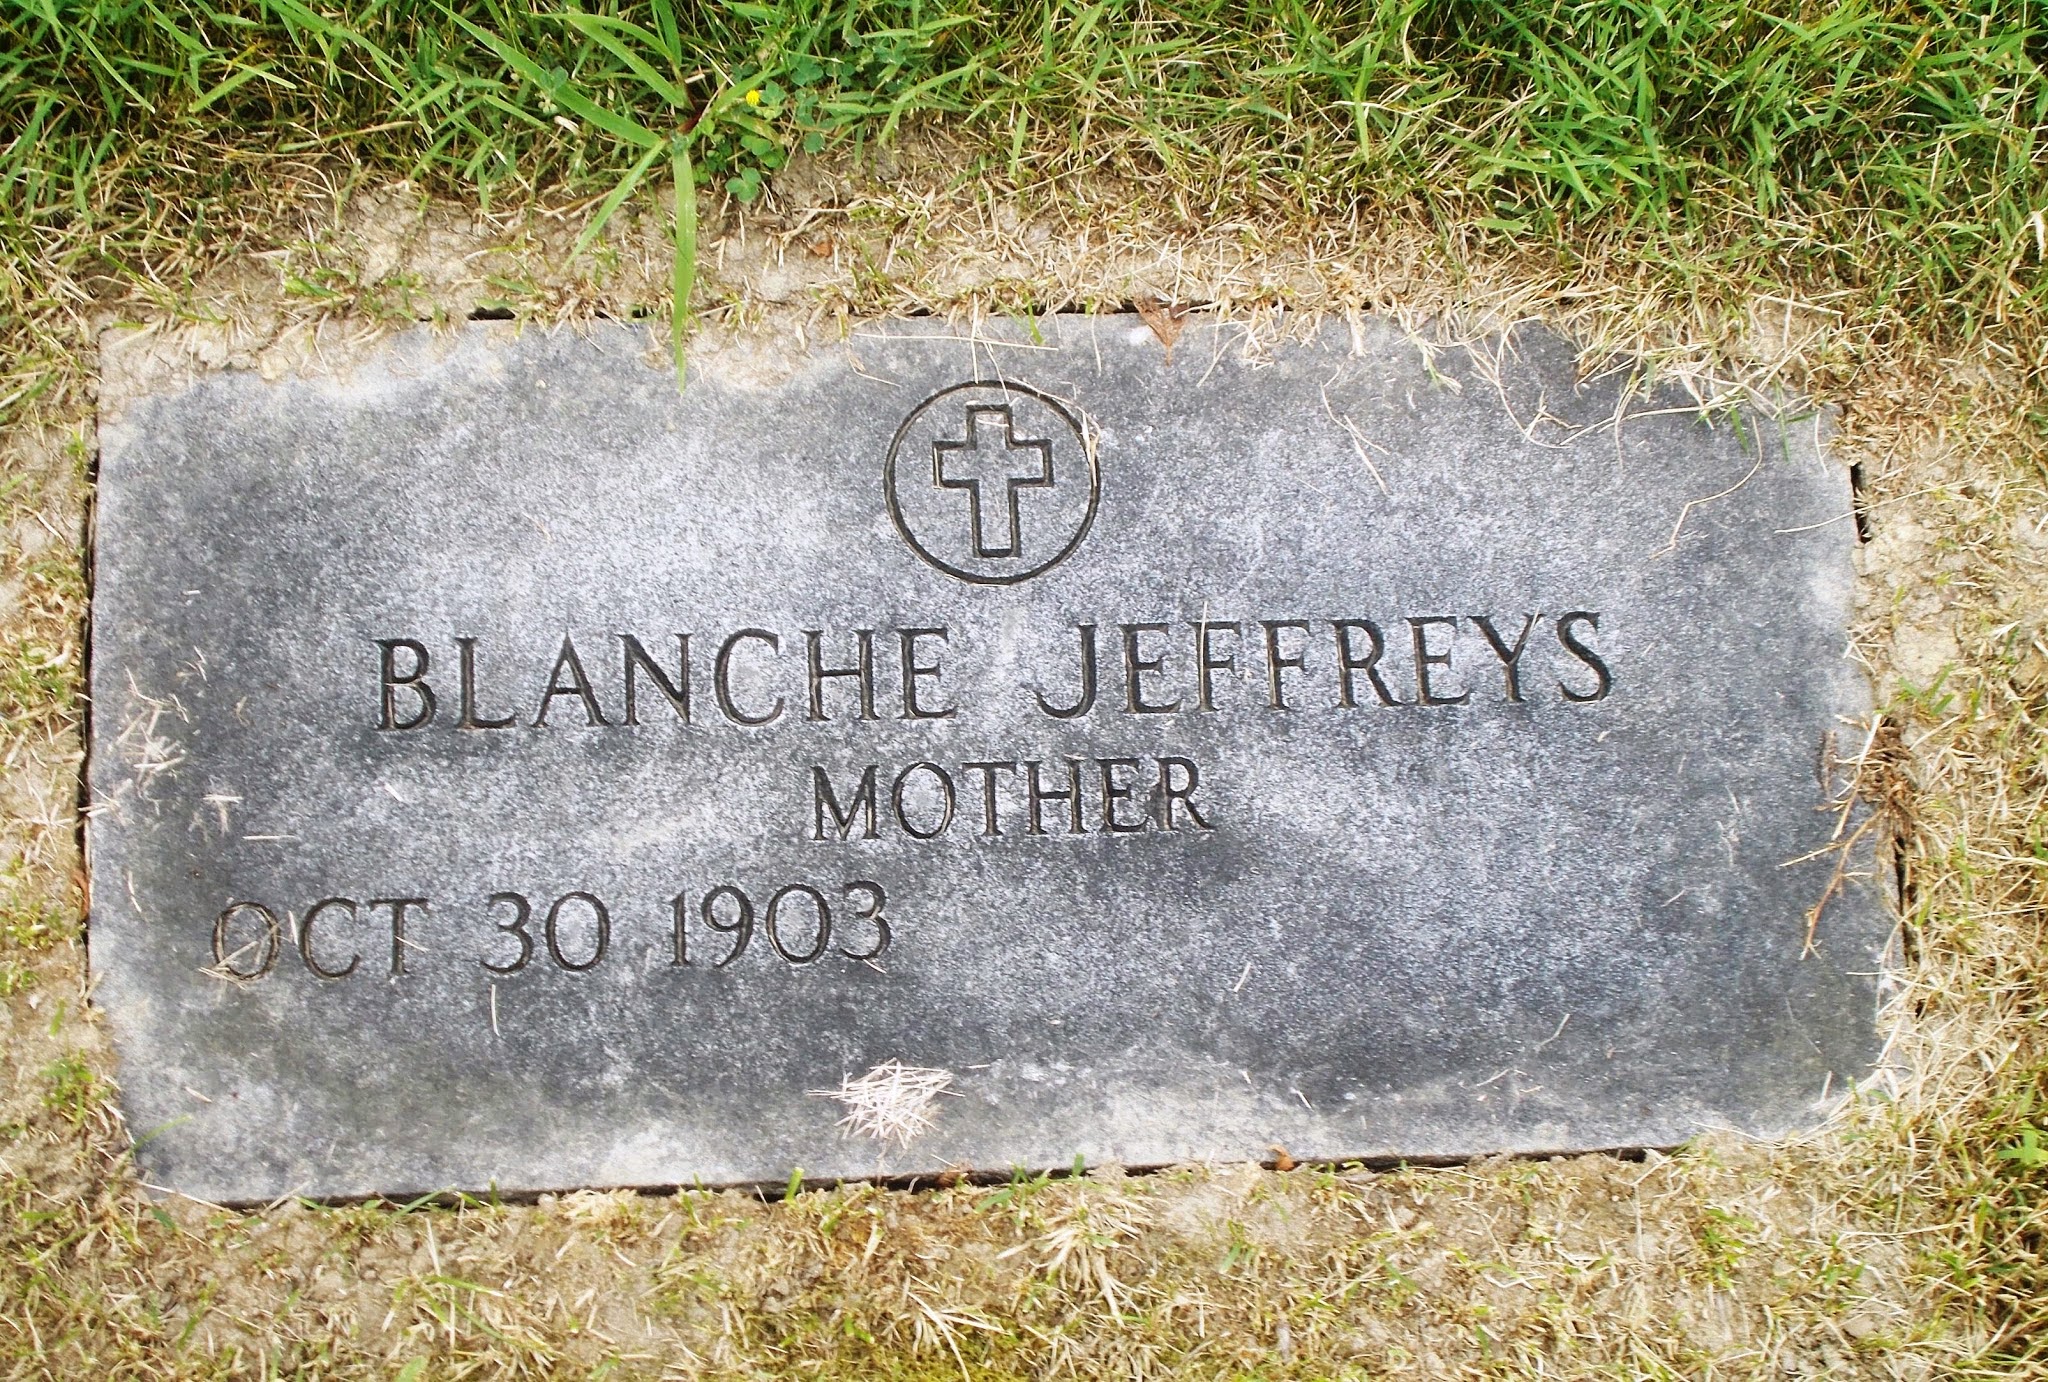 Blanche Jeffreys